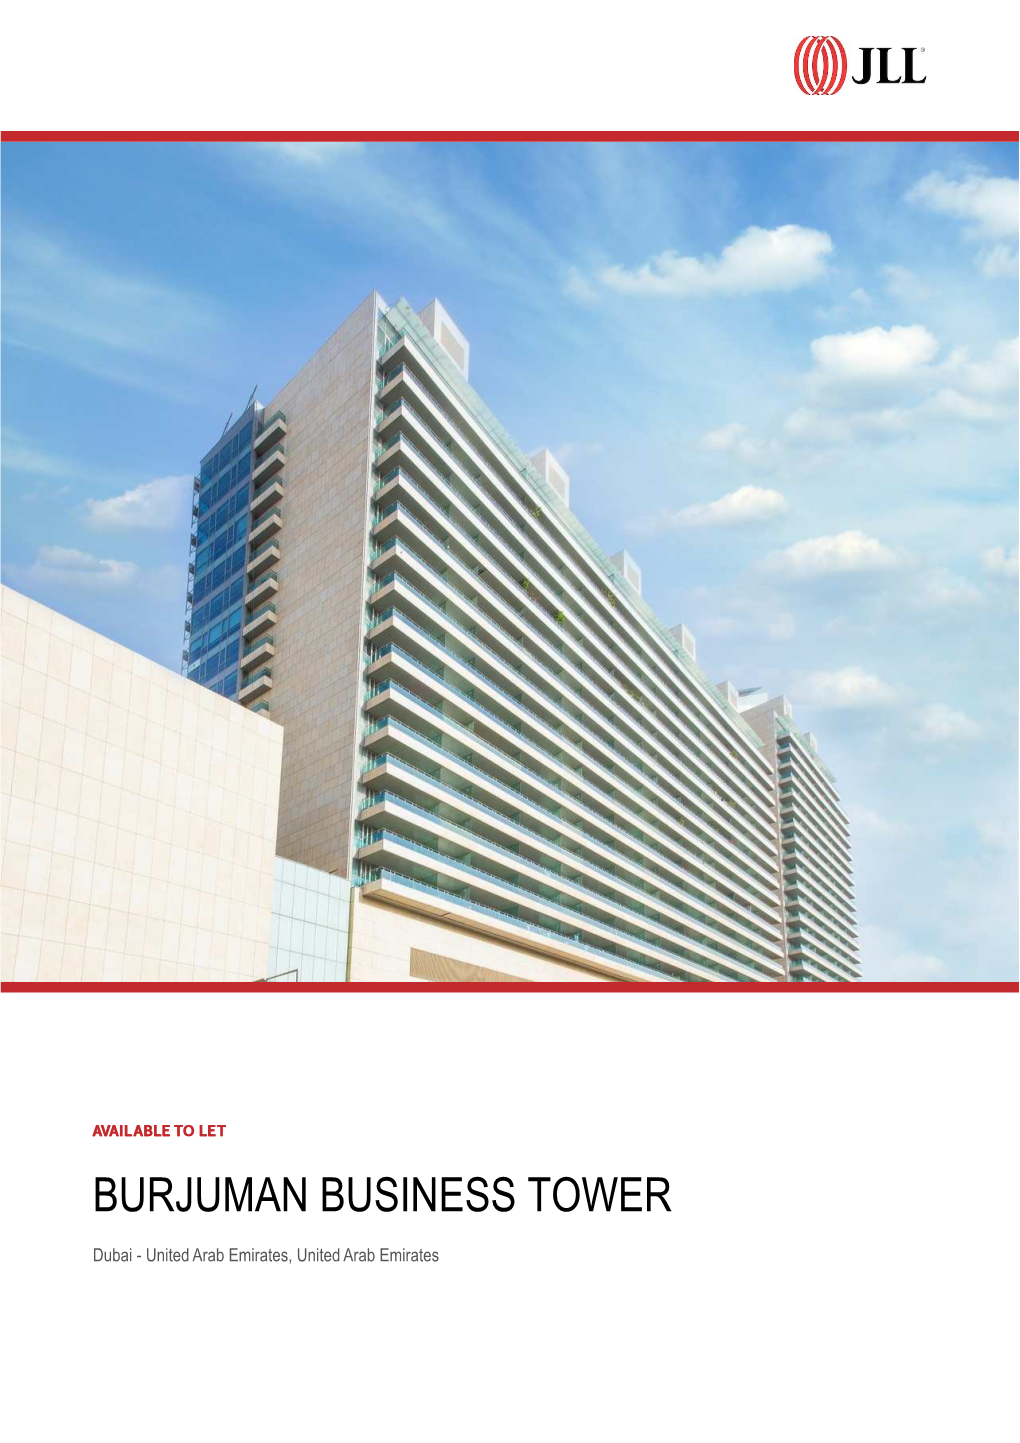 Burjuman Business Tower